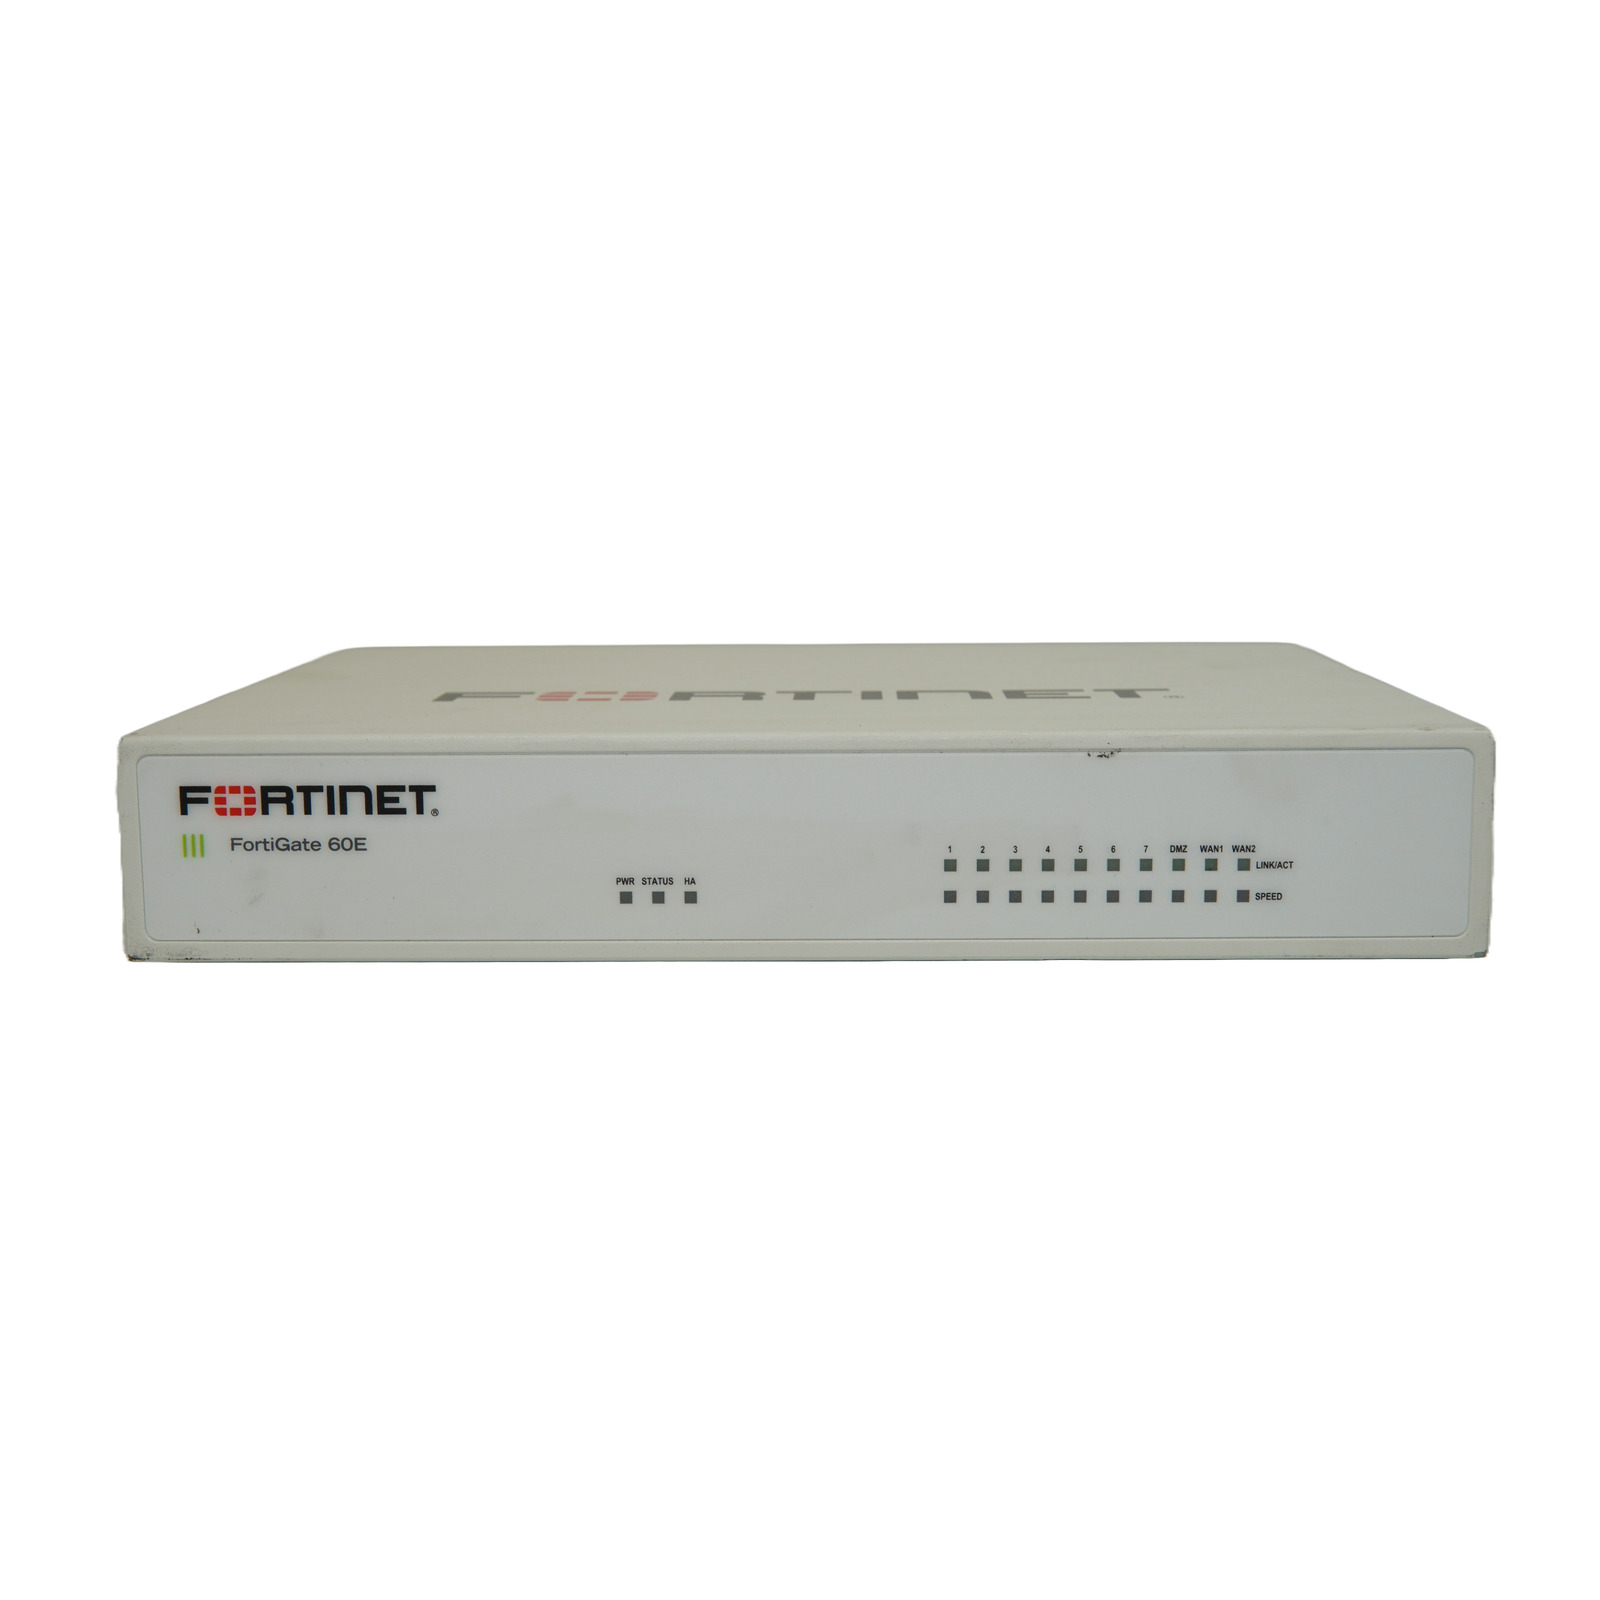 Fortinet Fortigate-60E FG-60E Network Security Firewall